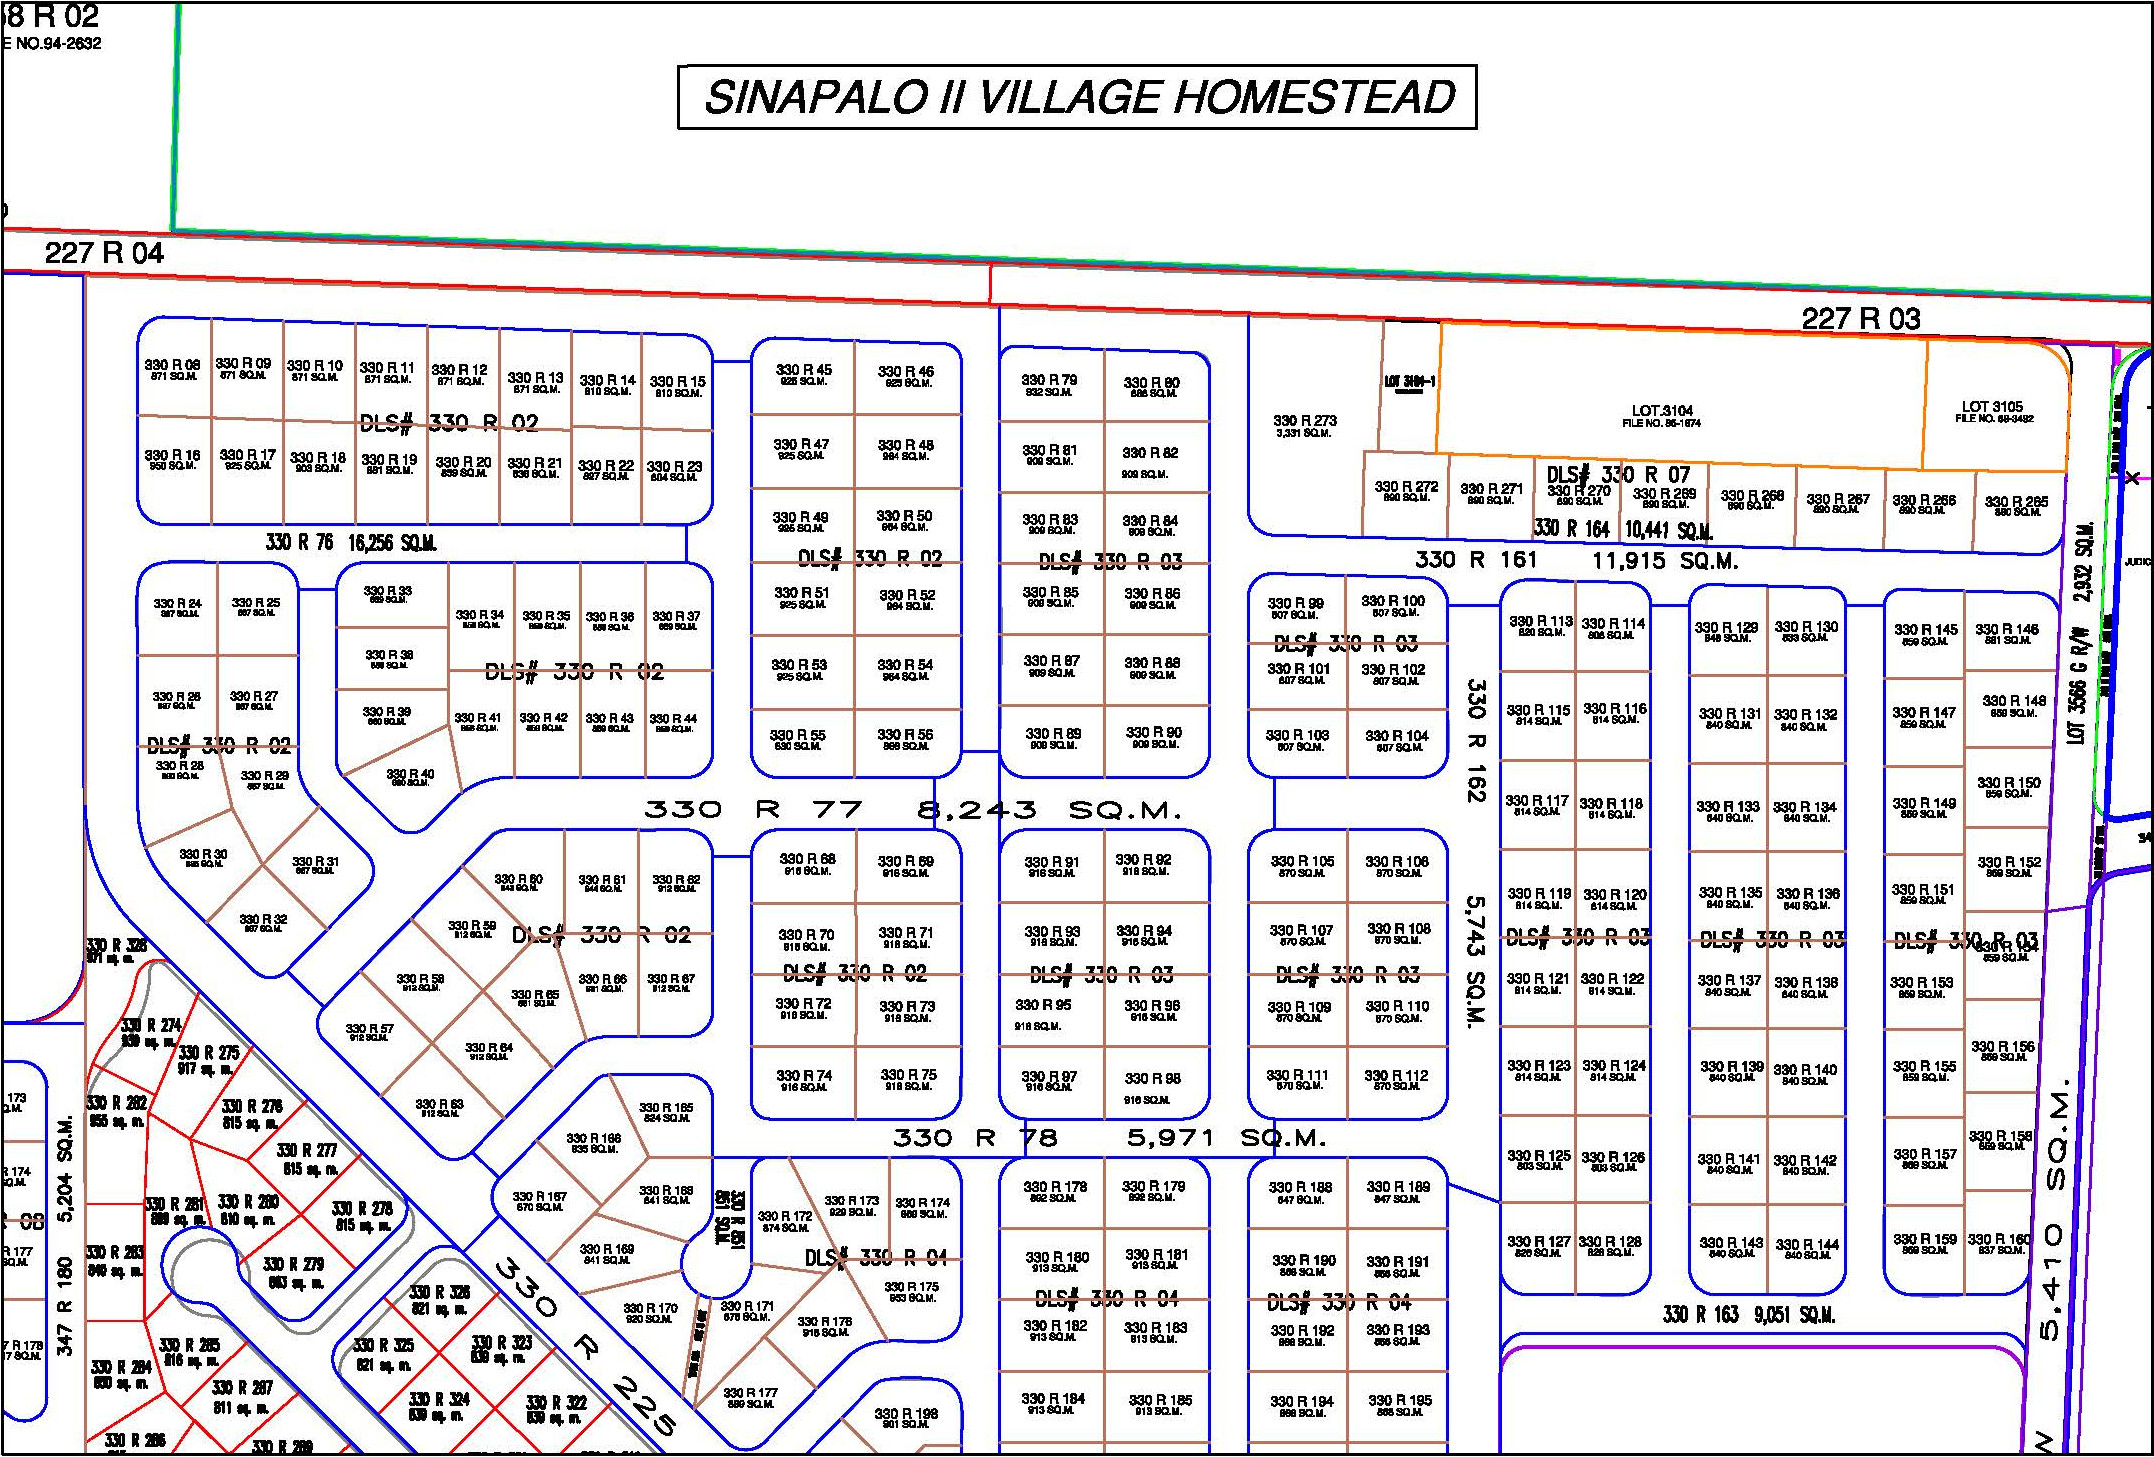 Sinapalo II - Model 1 Rota Village Maps